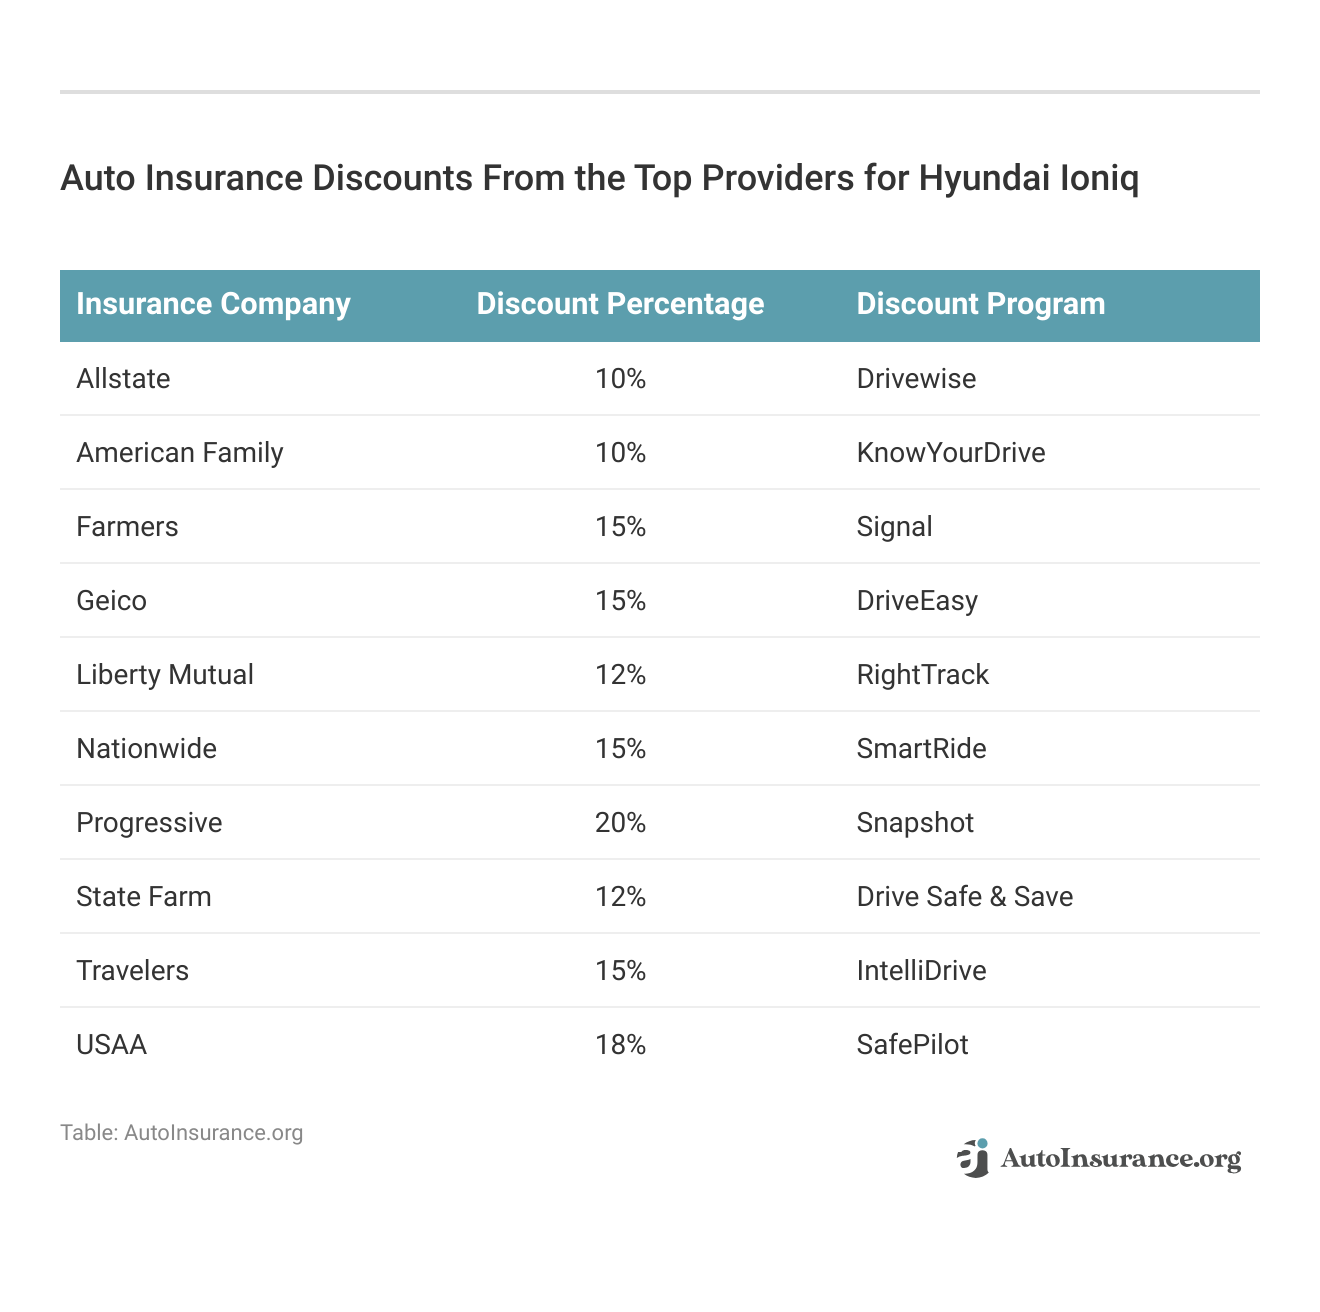 <h3>Auto Insurance Discounts From the Top Providers for Hyundai Ioniq</h3>